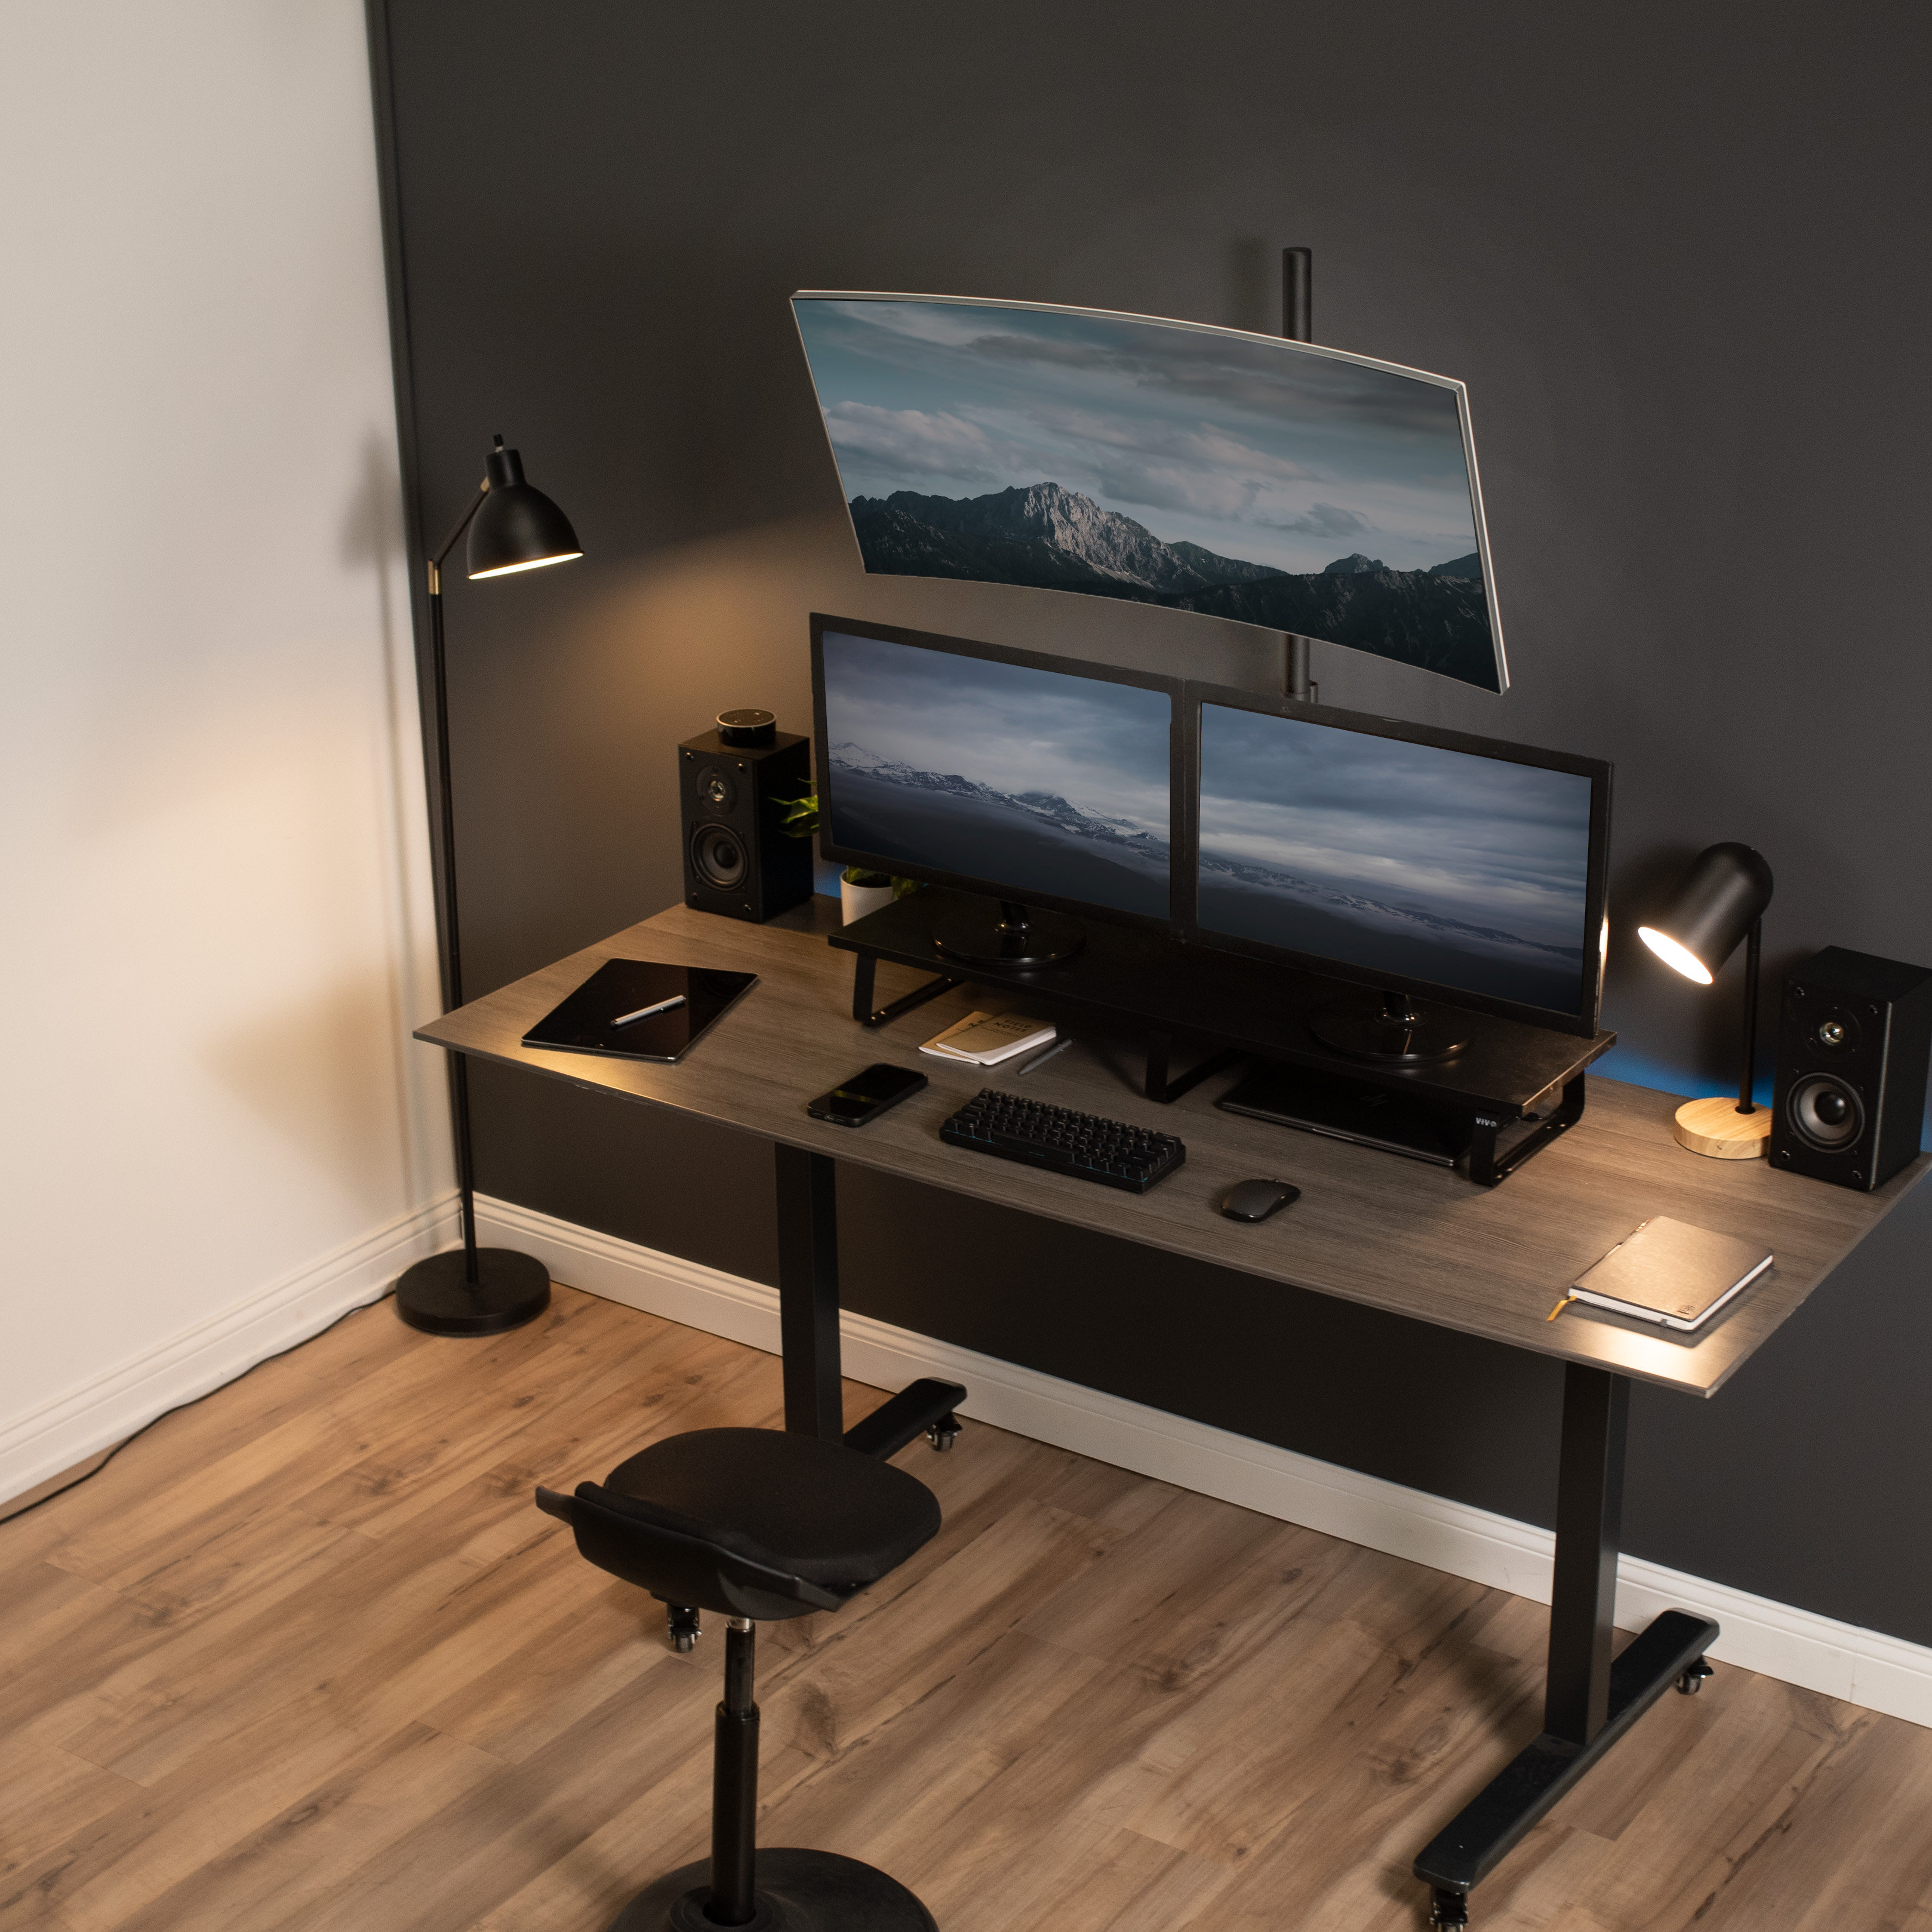 VIVO Full Motion Monitor + Laptop Desk Mount VESA Stand Fits 13